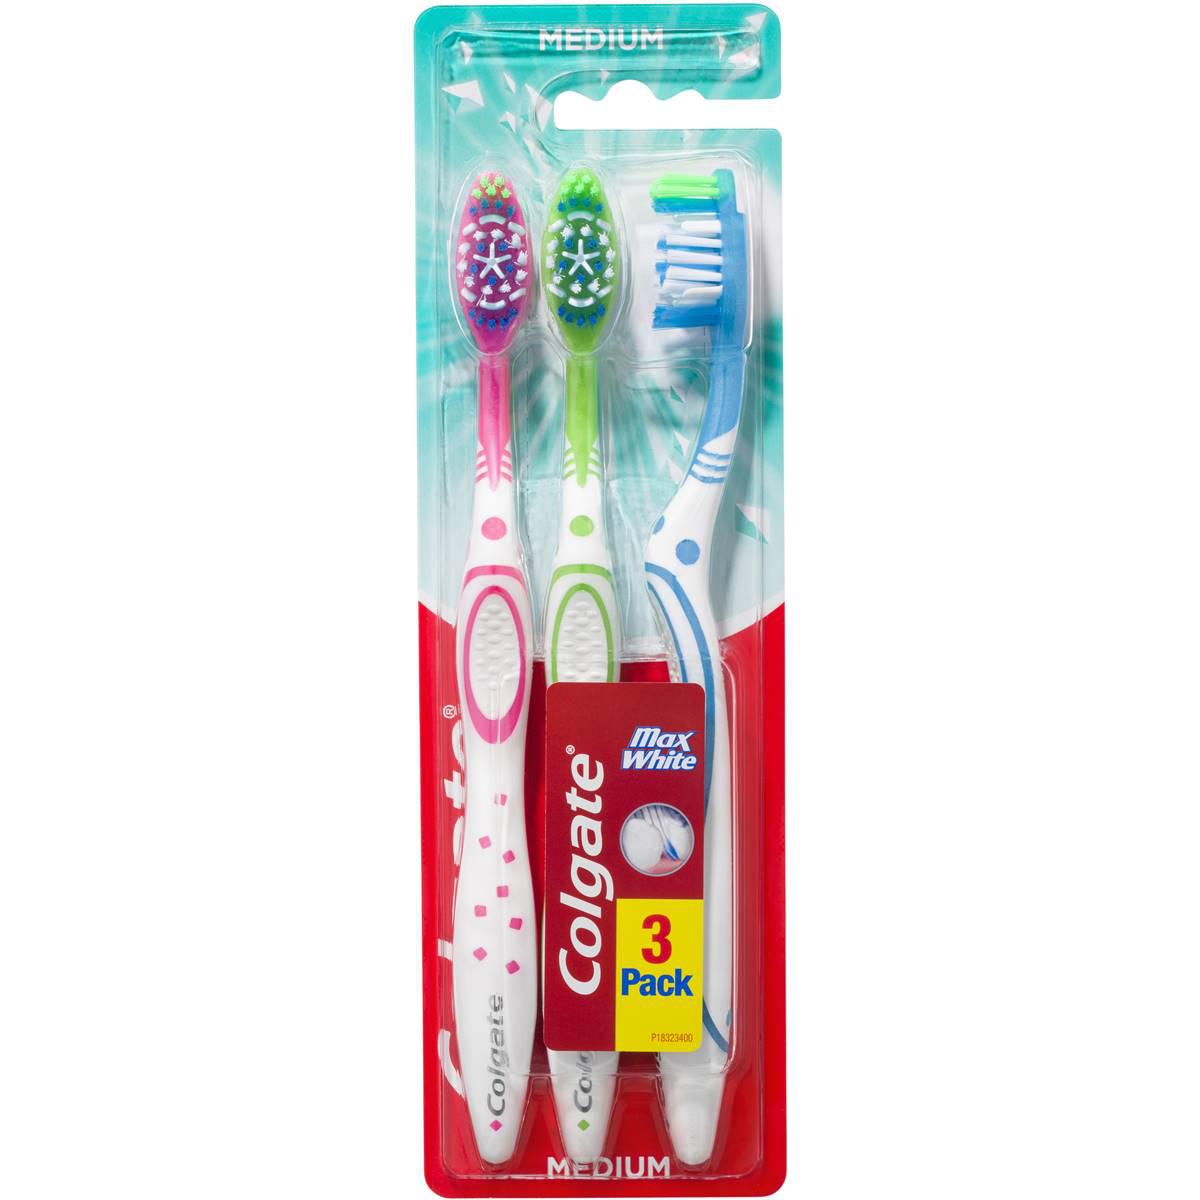 Colgate Max White Medium Bristles Manual Toothbrush Value Pack 3 Pack